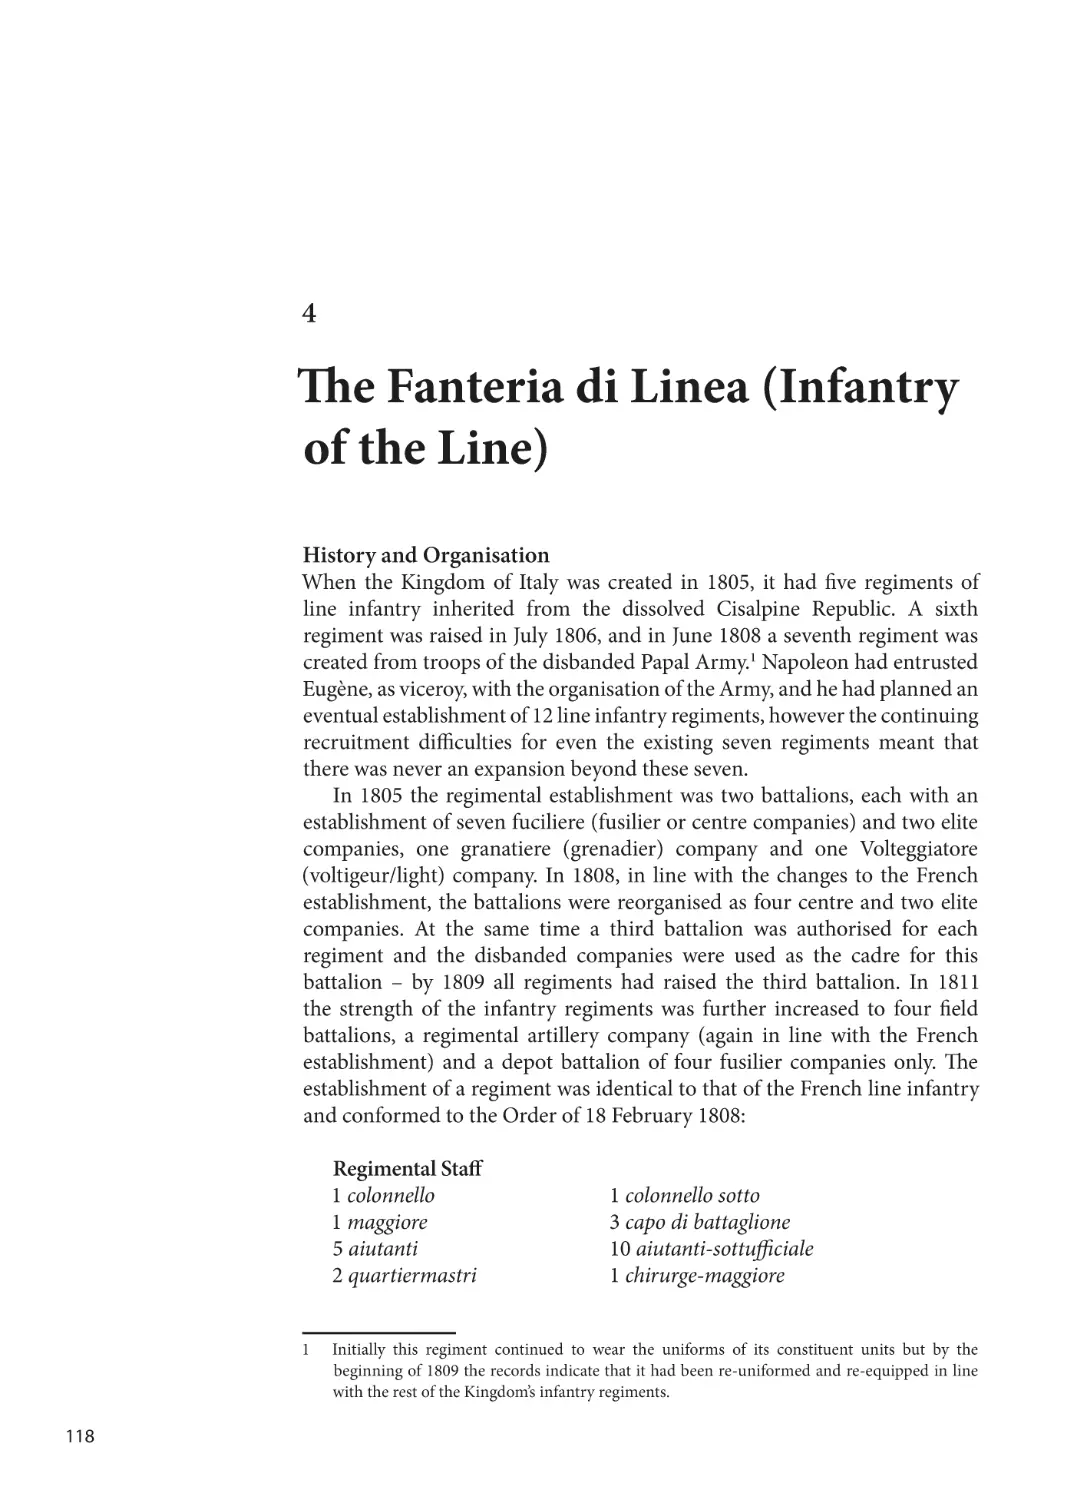 4. Fanteria di Linea (Infantry of the Line)